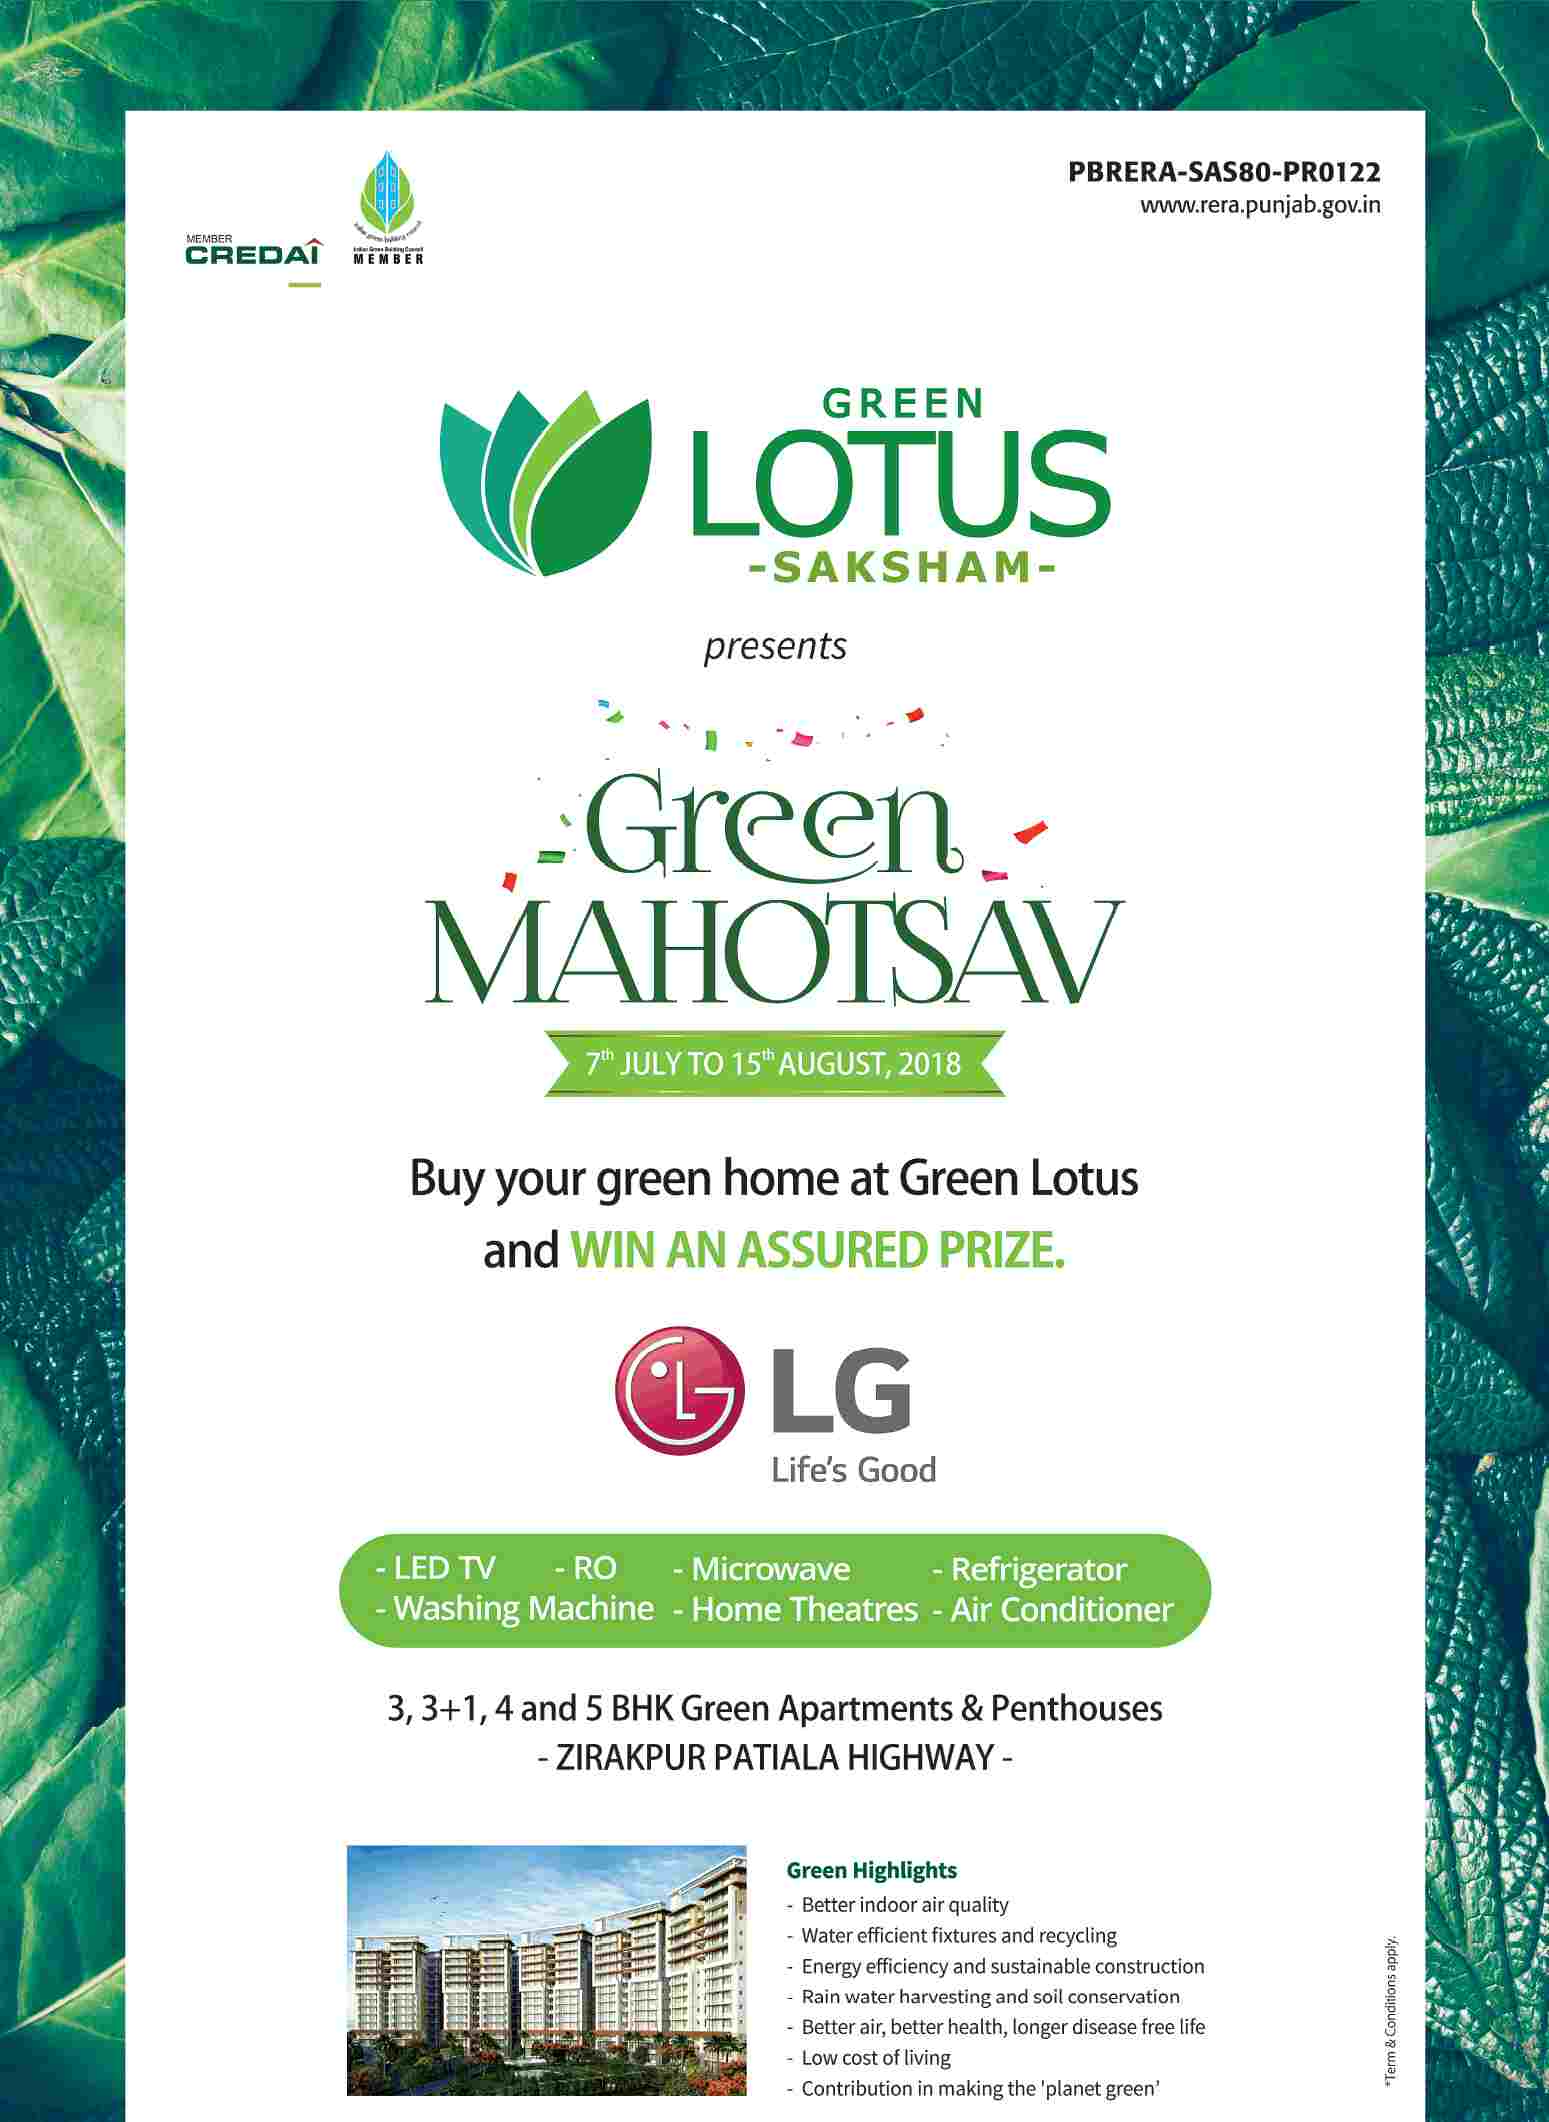 Buy home & win assured prize at Maya Green Lotus Saksham in Chandigarh Update